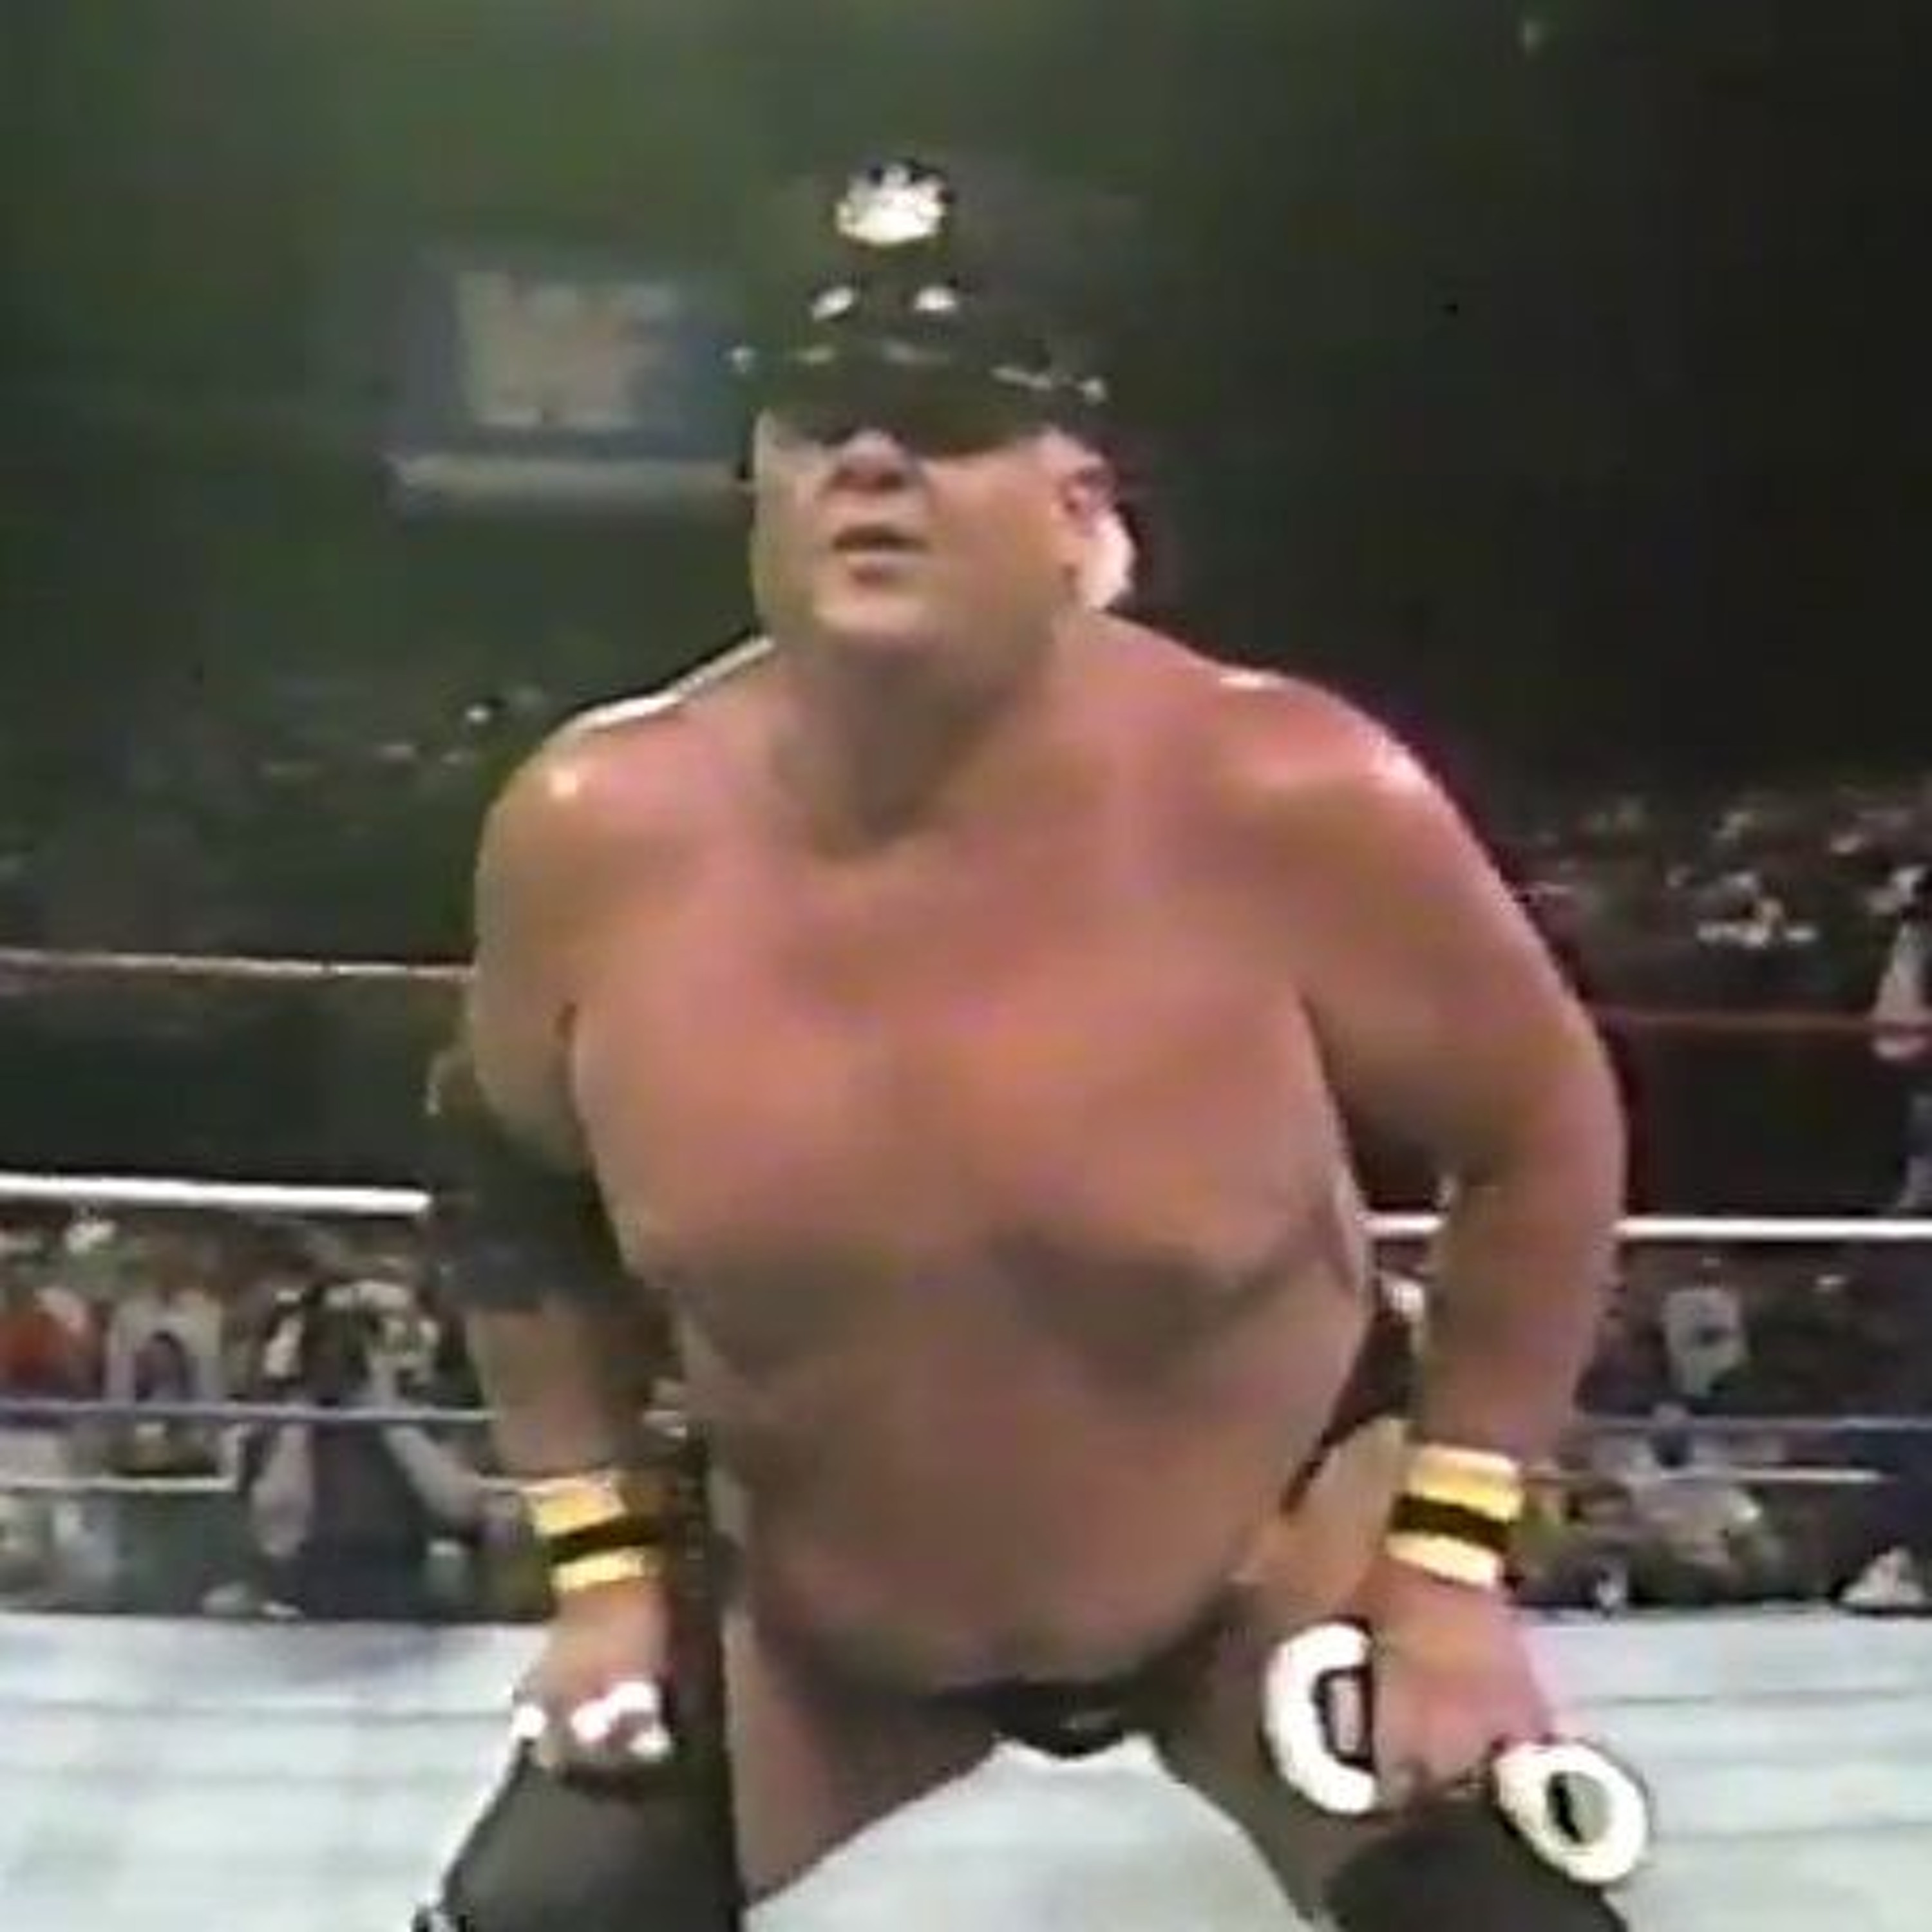 GFA Live #192: WWF Superstars 08-26-1989 (Andre punks Warrior)